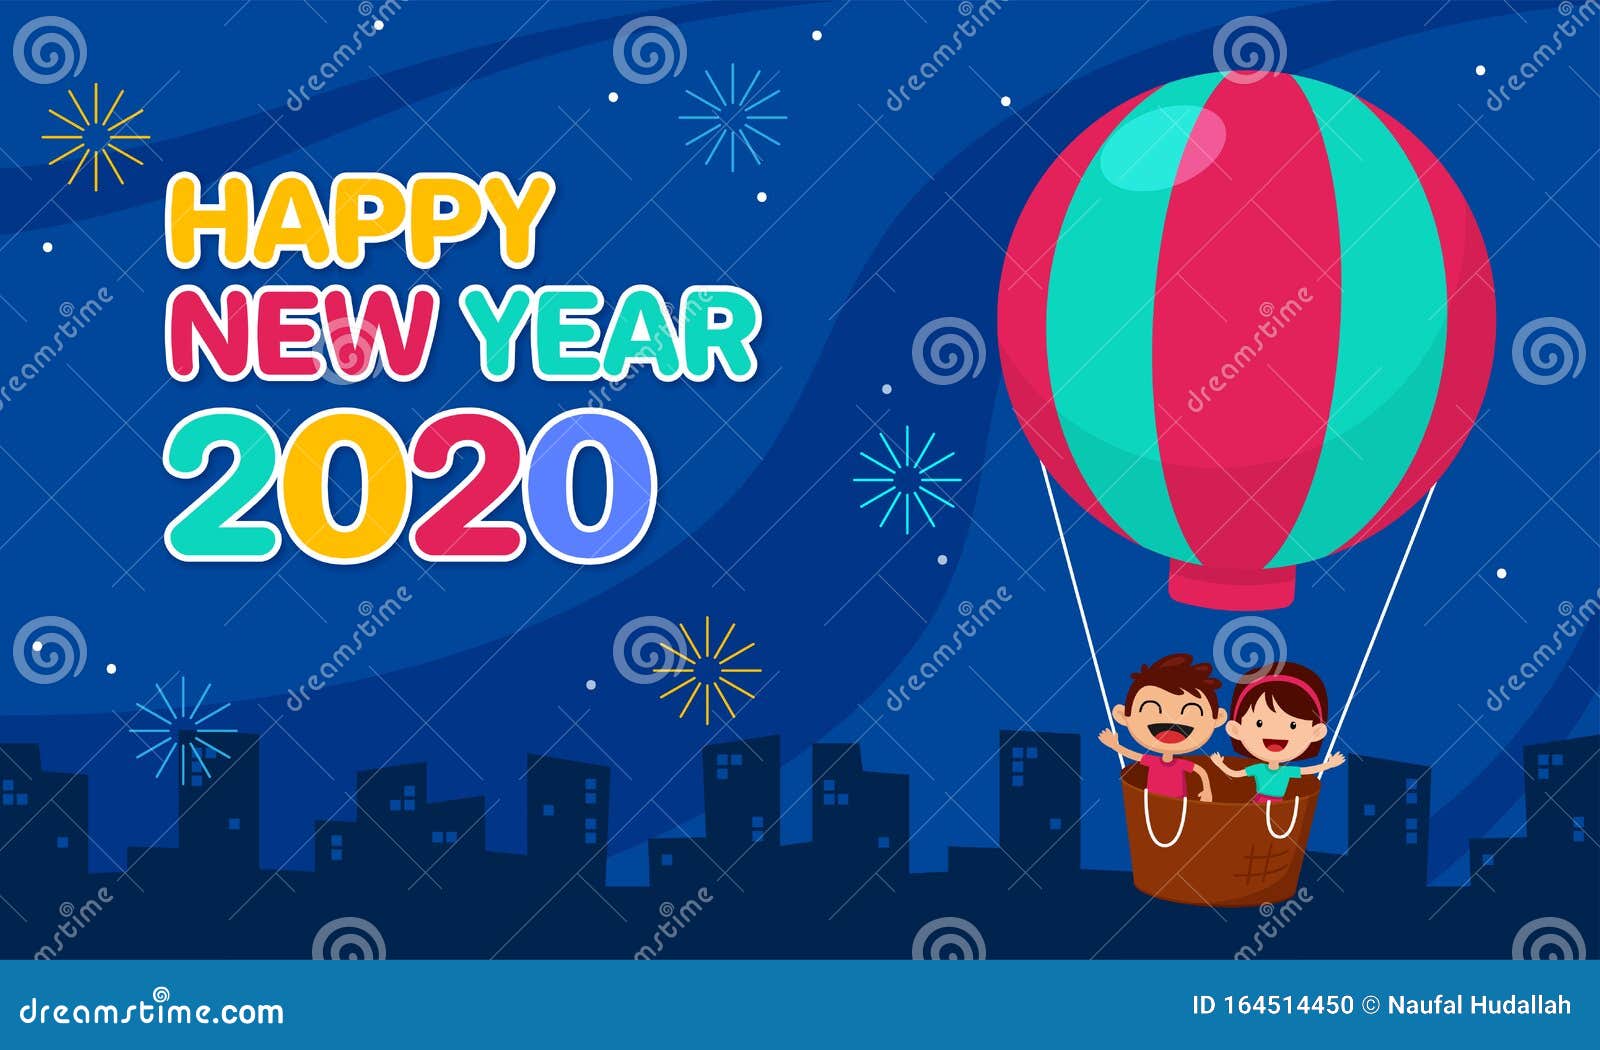 Happy New Year 2020 Cartoon Celebration Poster Design. Couple of ...